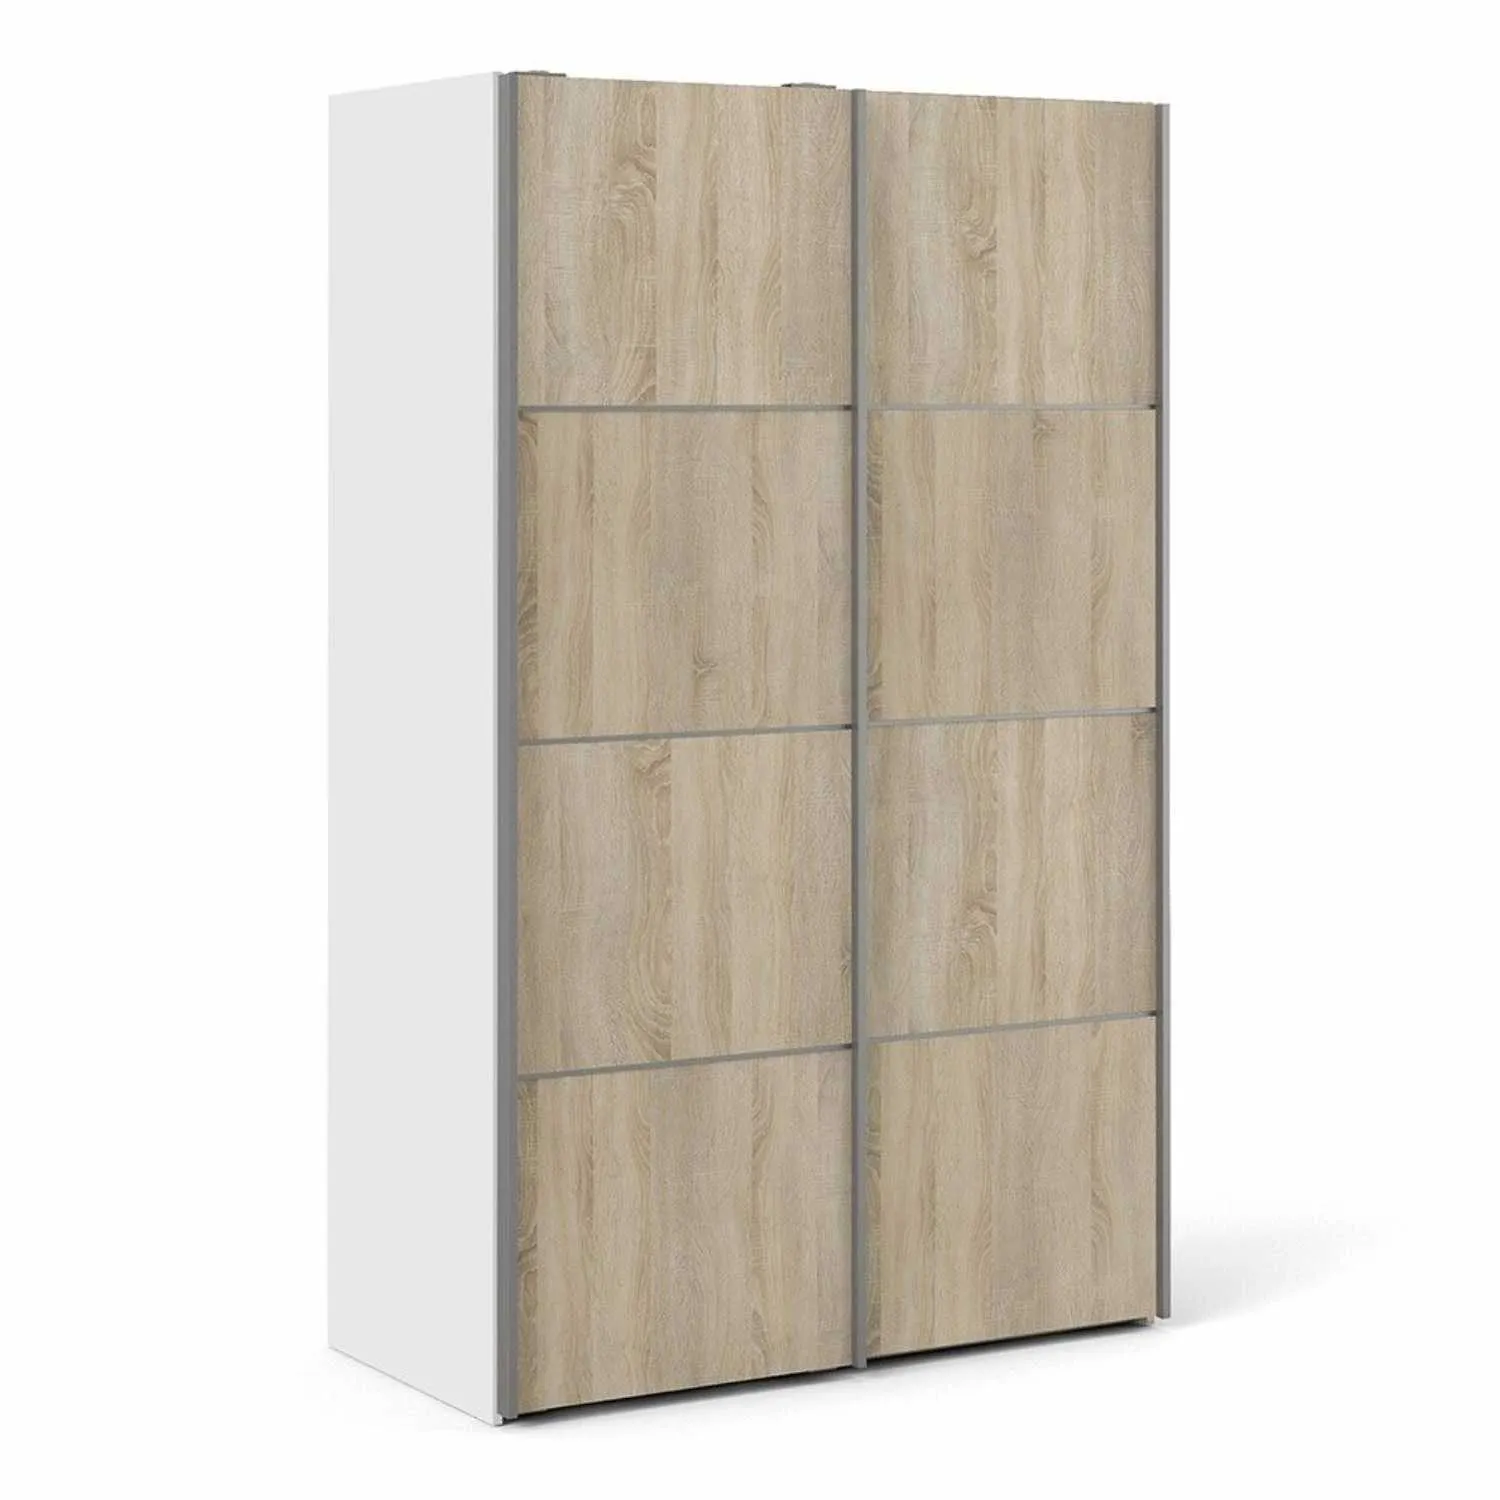 Large White Oak Doors Sliding Wardrobe 120cm With 5 Shelves